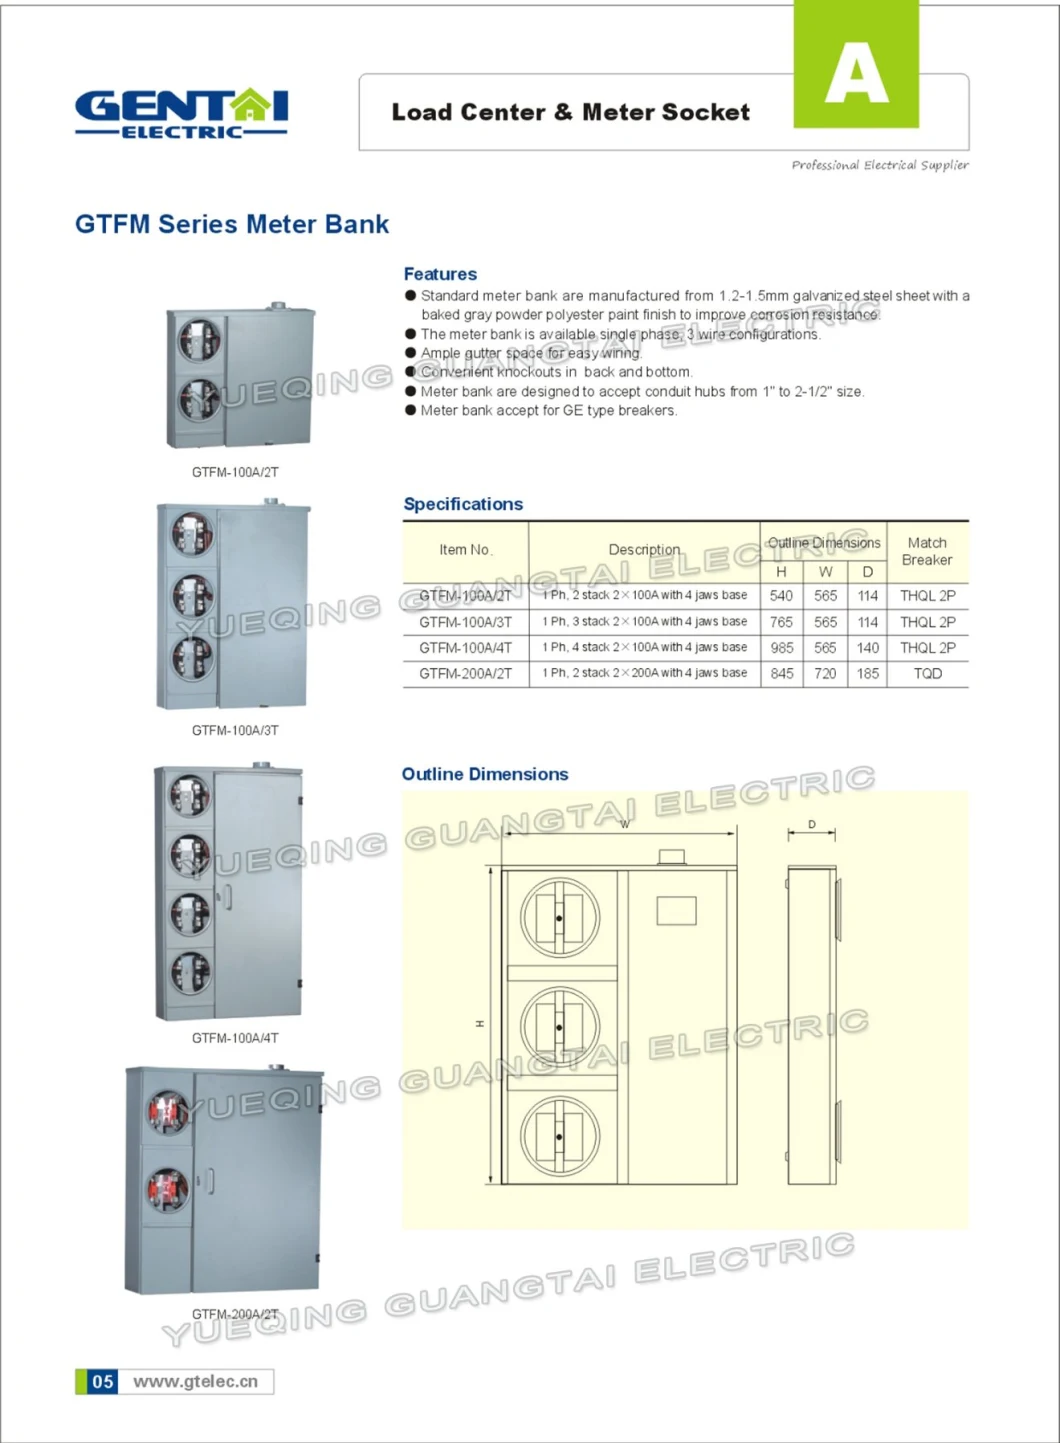 Gtfb-100A 4 Terminal Square Meter Socket